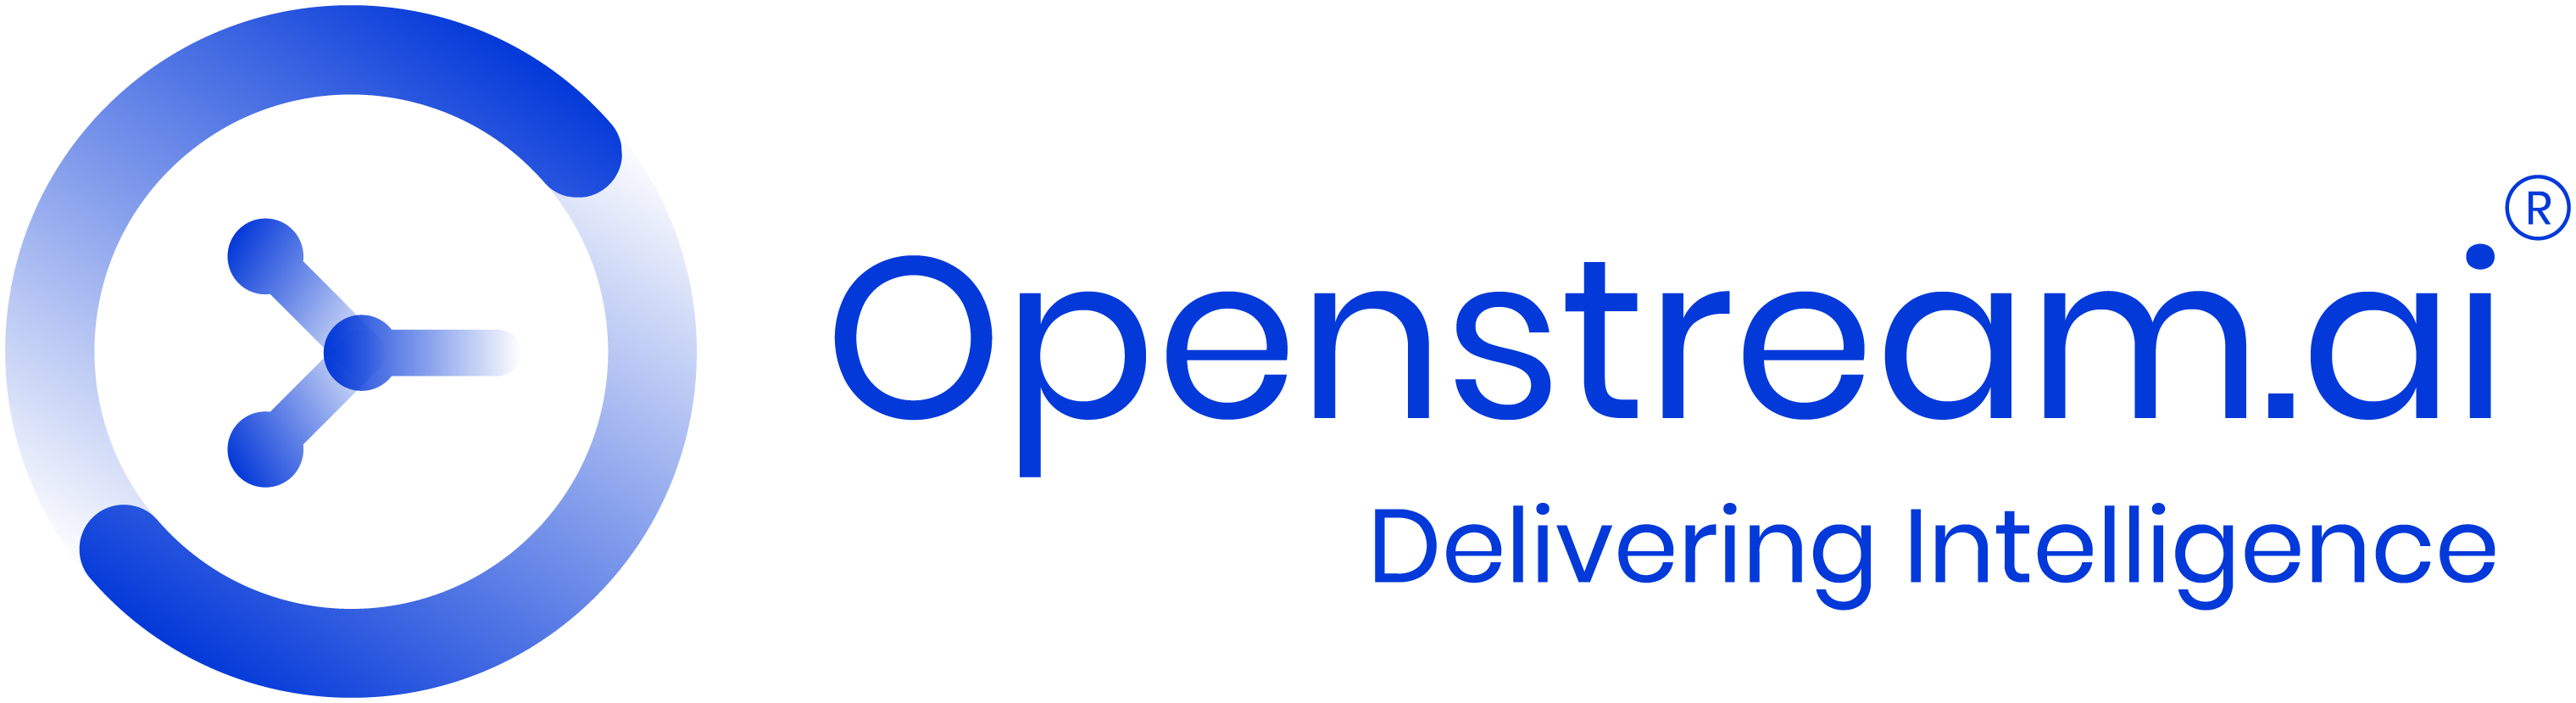 Openstream Logo